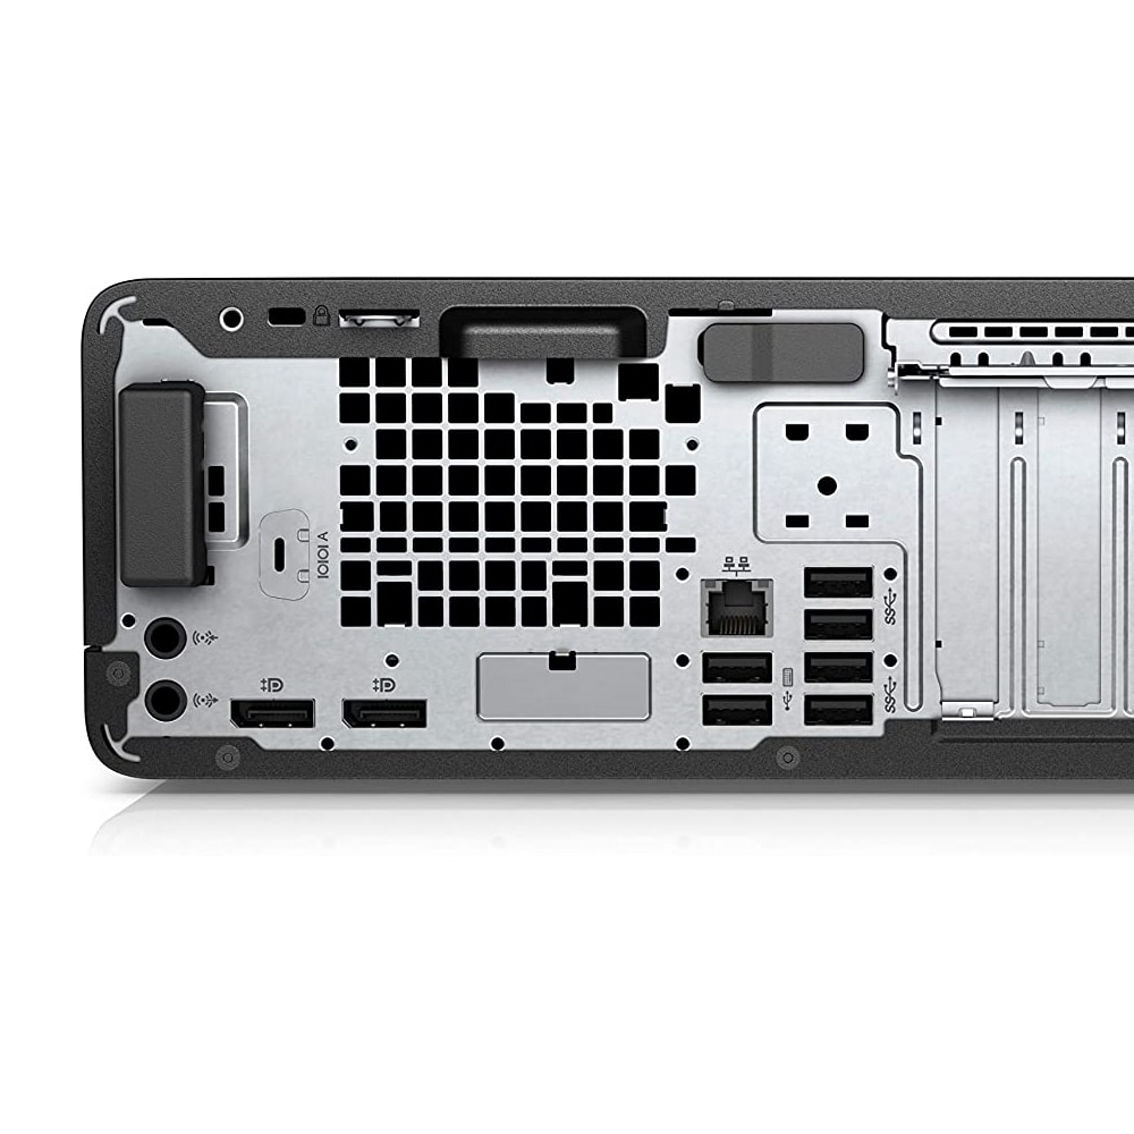 HP 800 G4-SFF Core i5-8500 3.0Ghz 16GB 256GB SSD PC (Refurbished) - Image 3 of 3